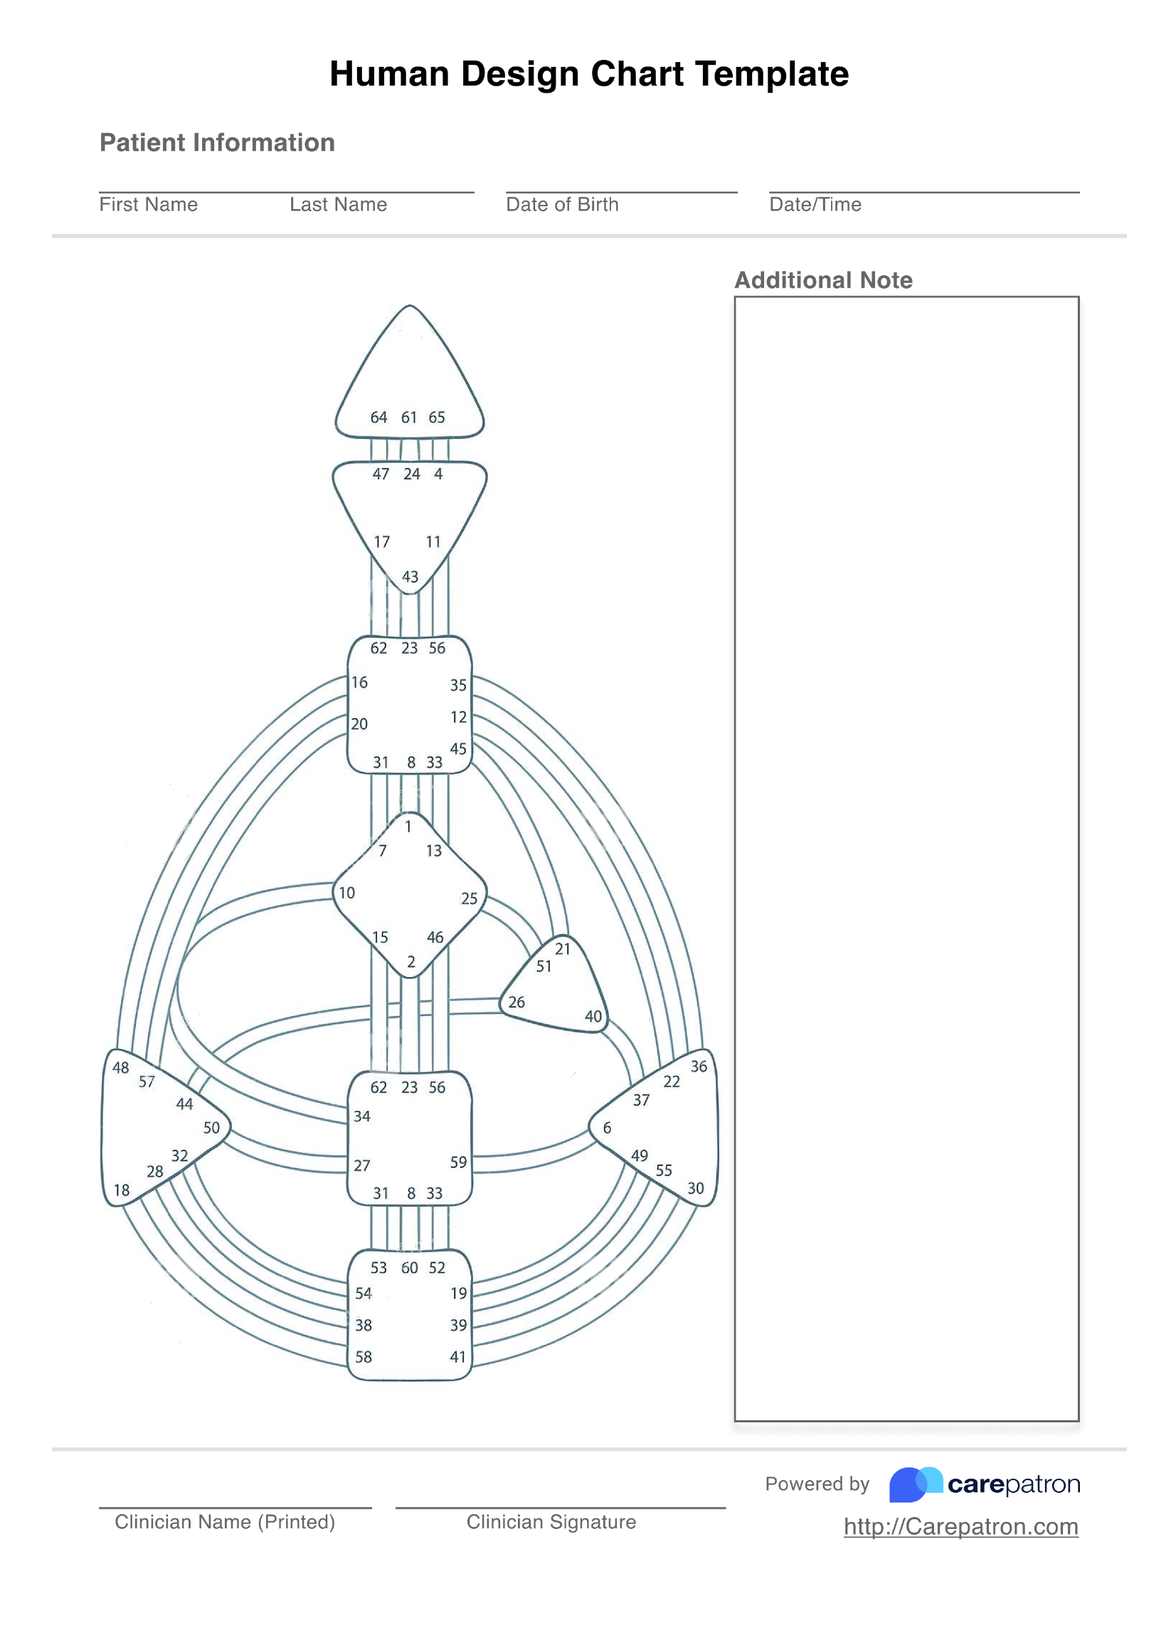 Human Design Chart Template PDF Example